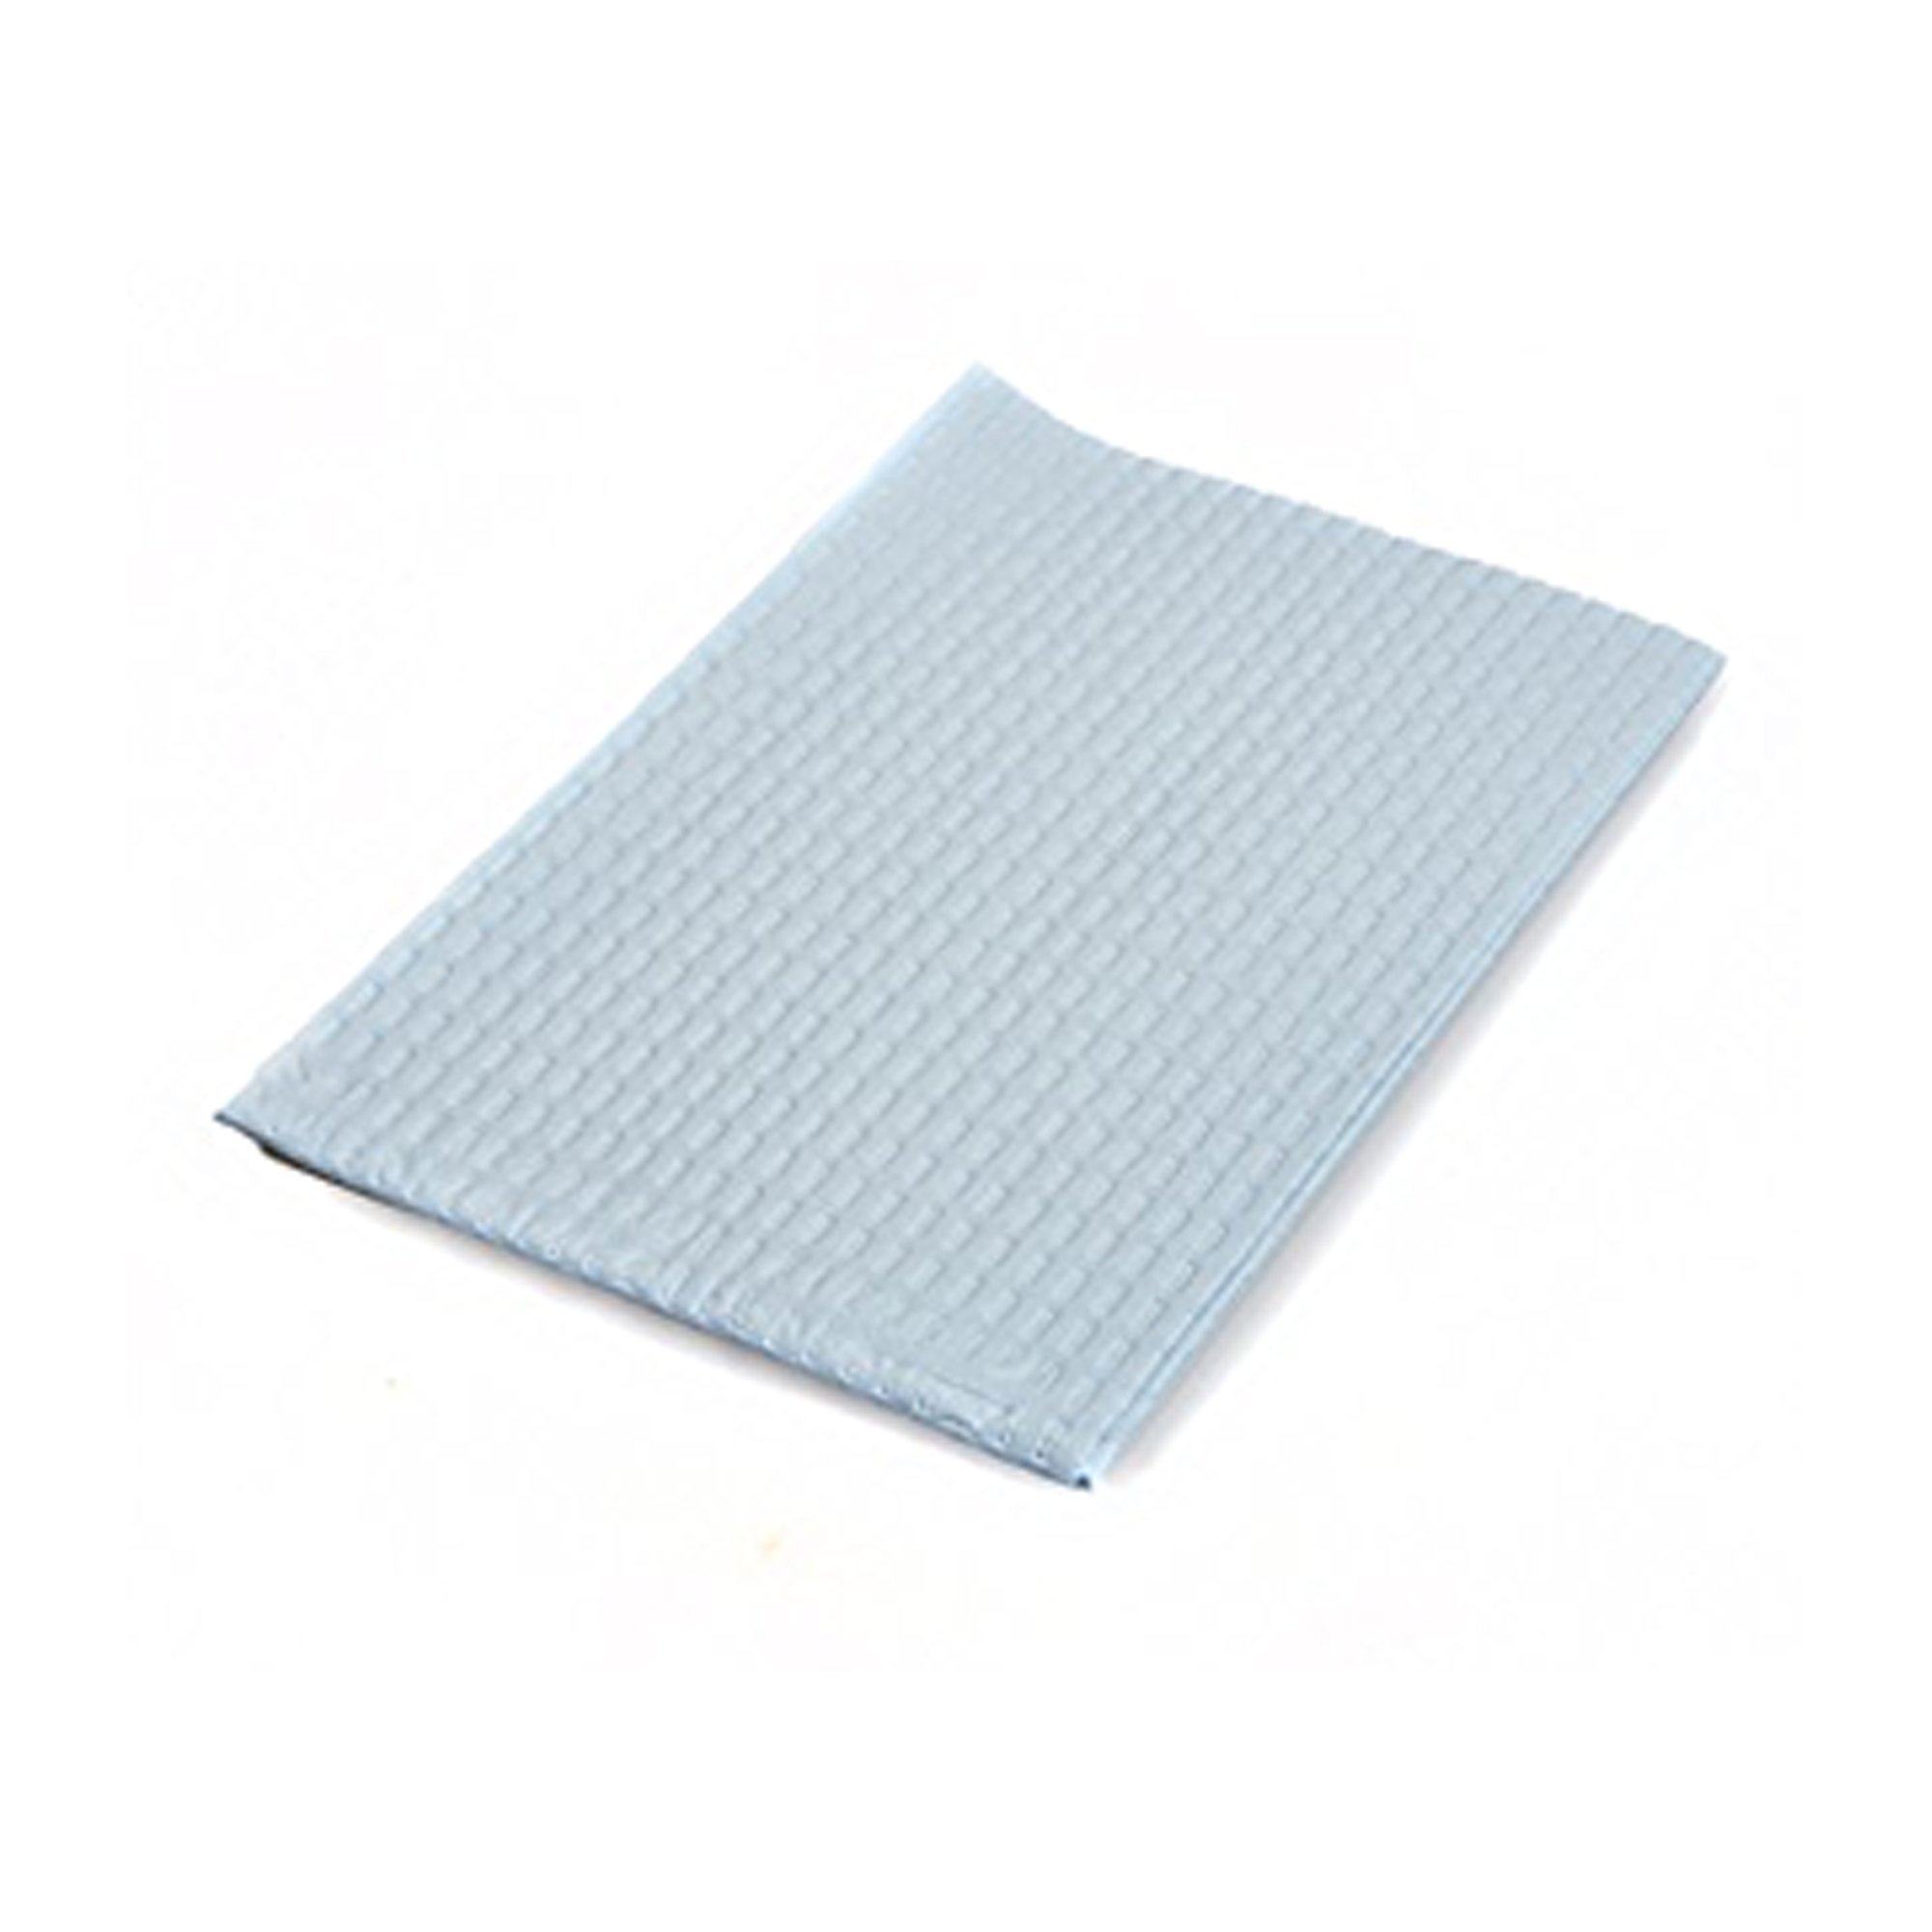 Towel Professional Polyback 3-ply 13.5 W X 18 L  .. .  .  